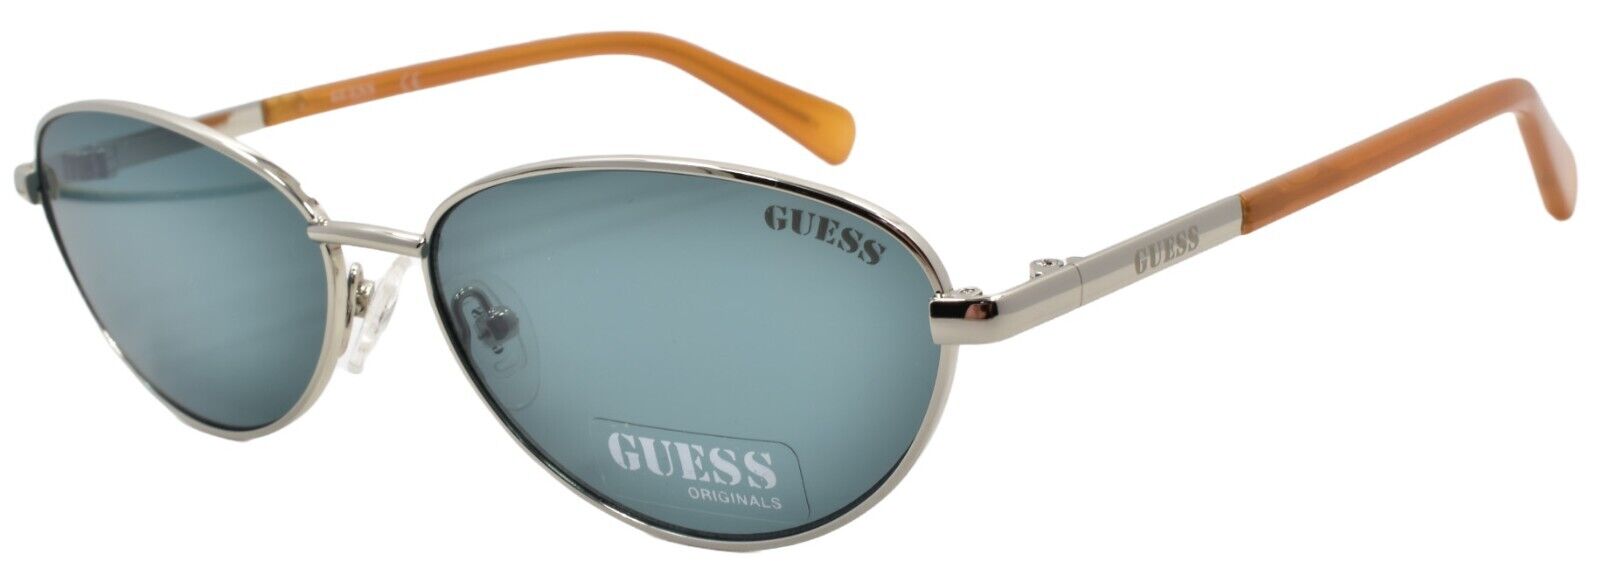 1-GUESS GU8230 10N Unisex Sunglasses 57-14-140 Shiny Light Nickeltin / Green-889214282224-IKSpecs